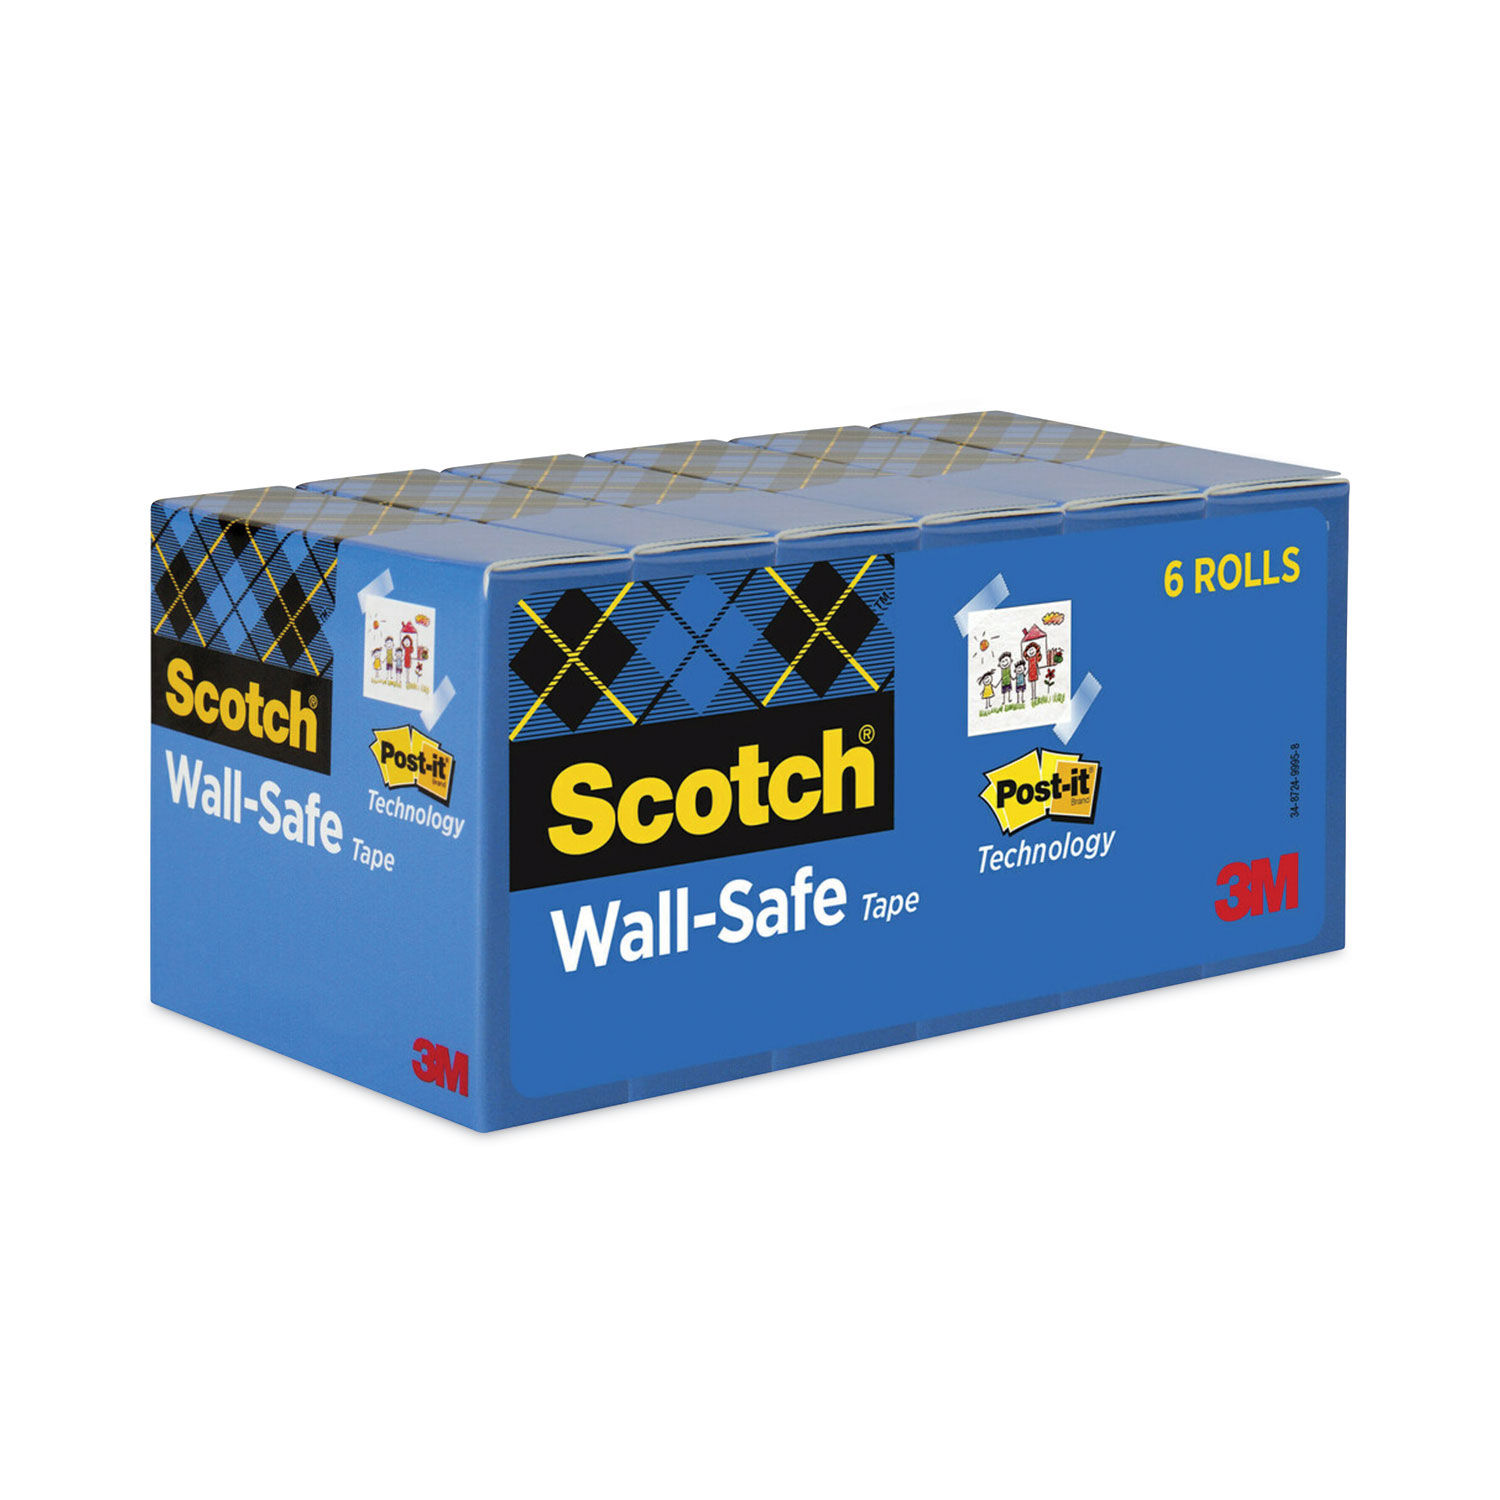 Wall-Safe Tape by Scotch® MMM813S6